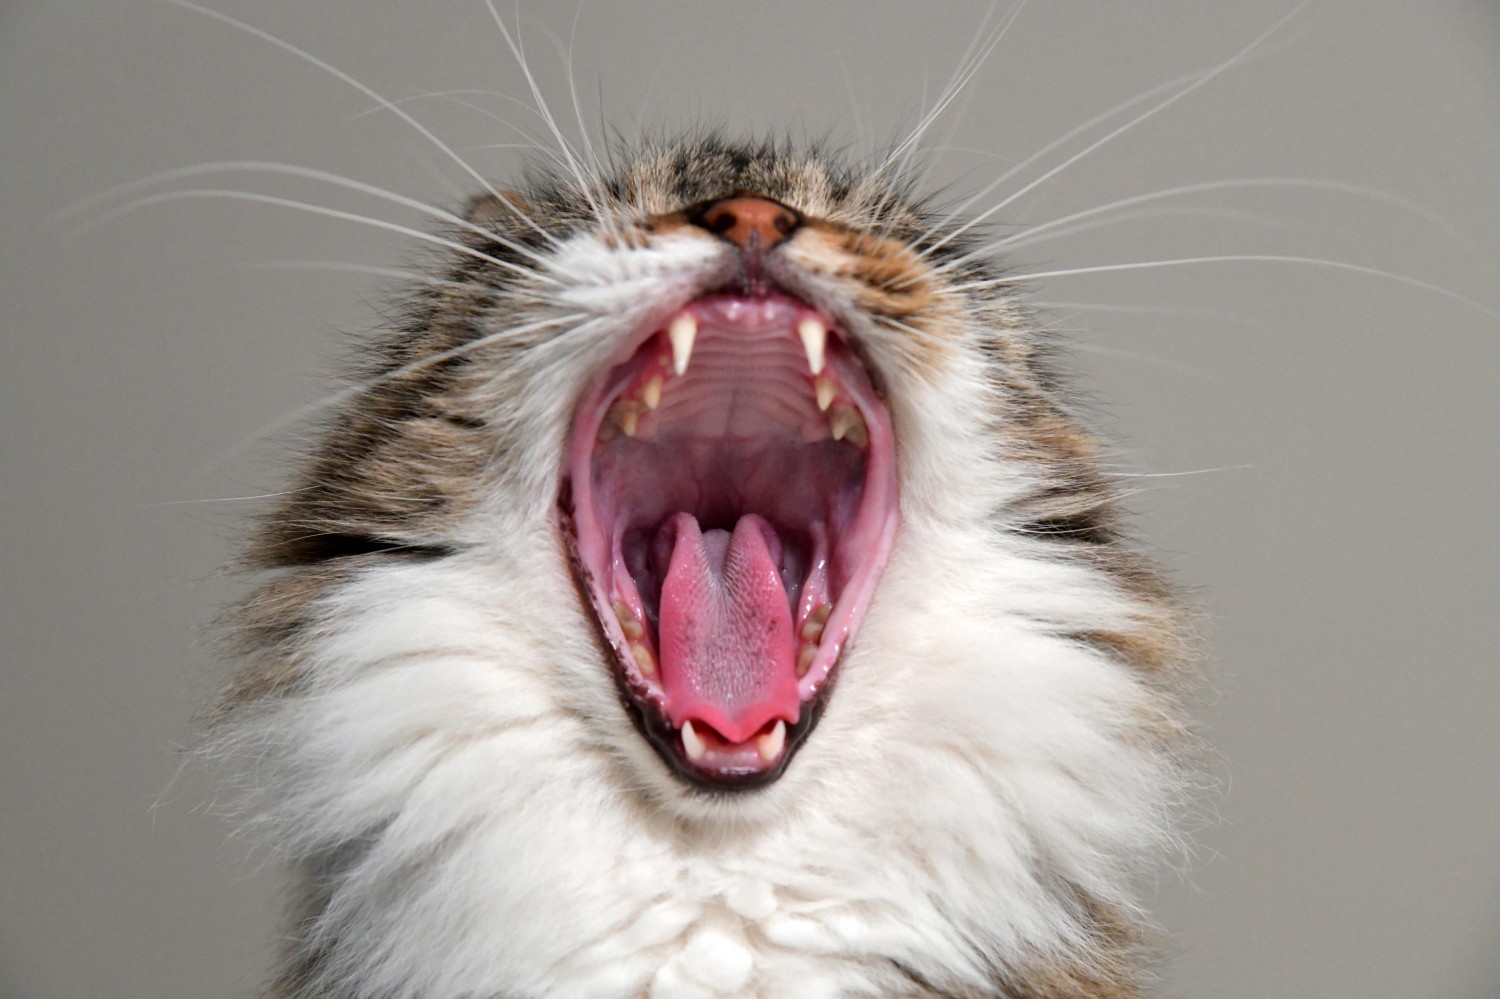 Big Yawn From Cat - Showing Teeth